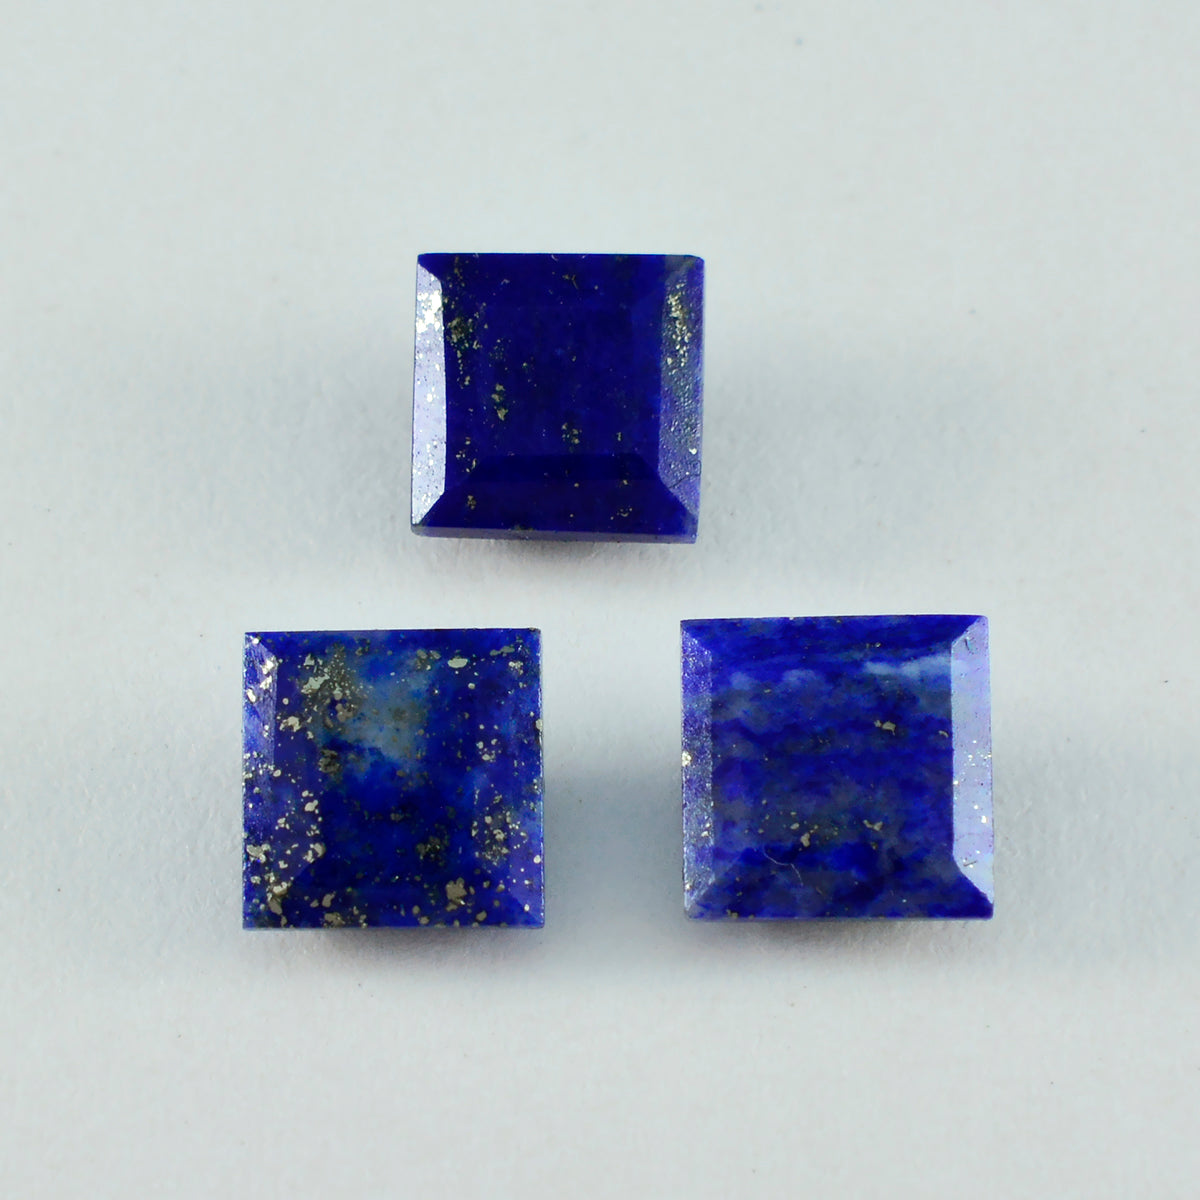 Riyogems 1PC Genuine Blue Lapis Lazuli Faceted 10x10 mm Square Shape lovely Quality Loose Gem